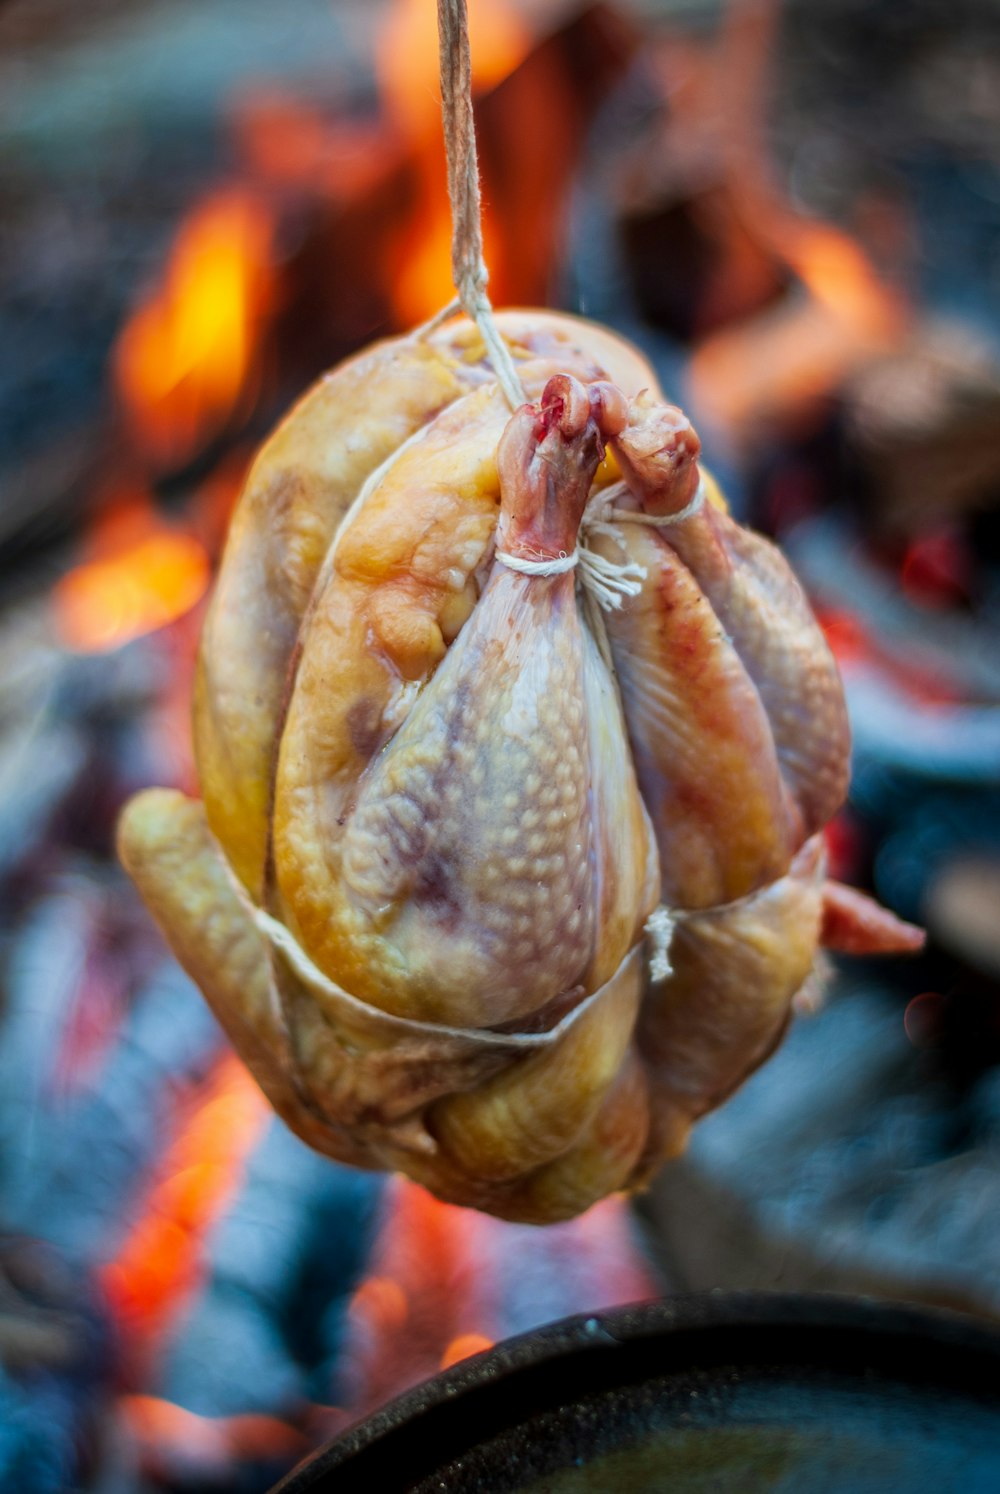 a close-up of a pig roast